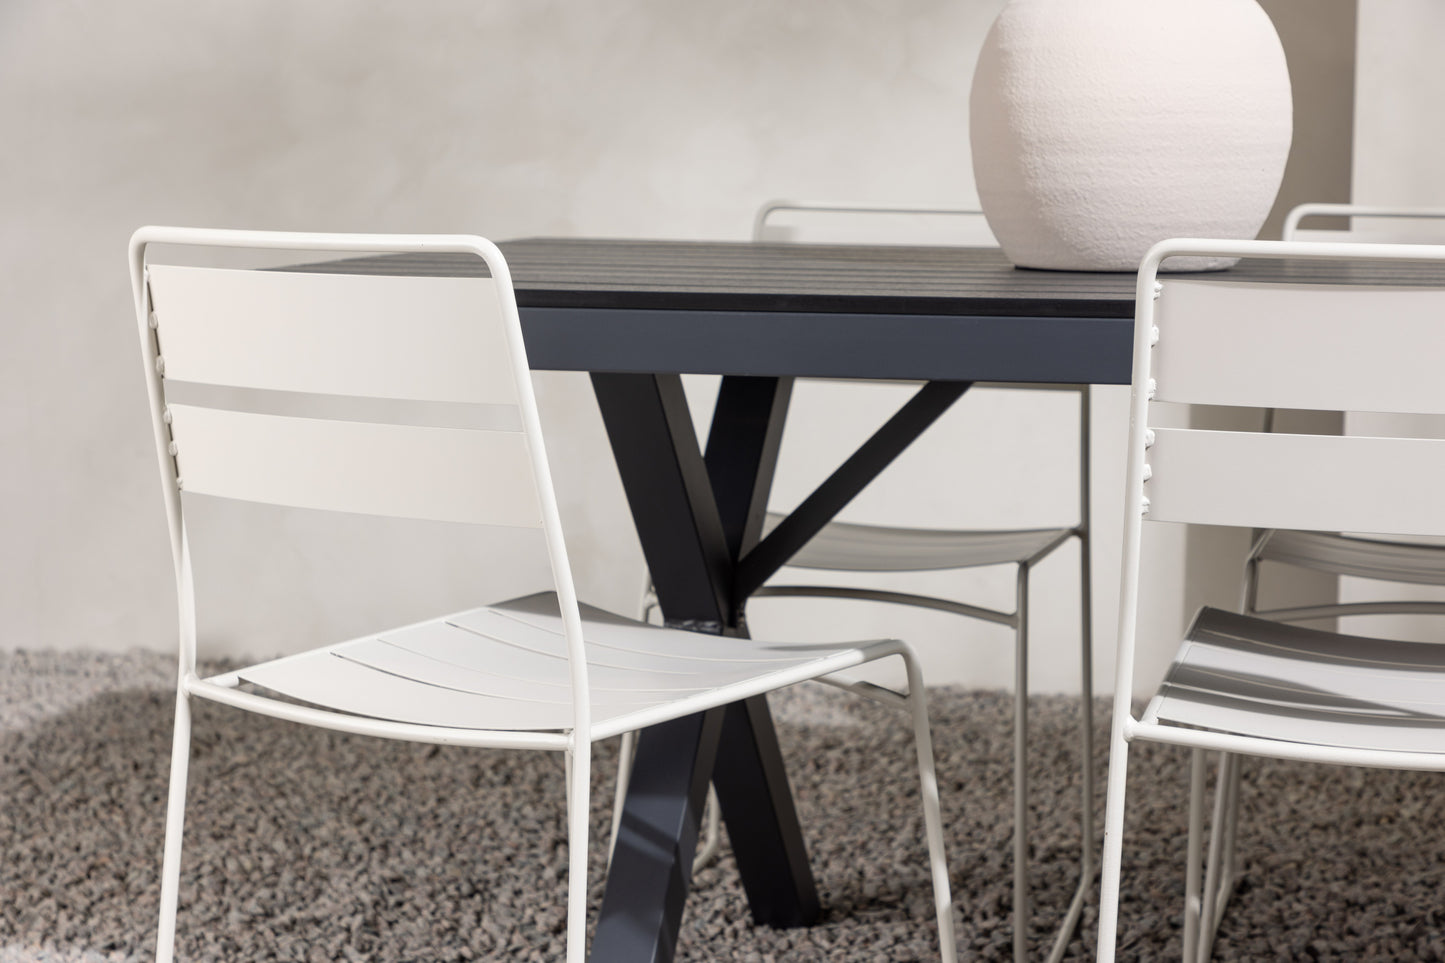 Garcia - Spisebord, Aluminium - Sort / Rektangulær 100*200* + Lia Spisebordsstol - Beige